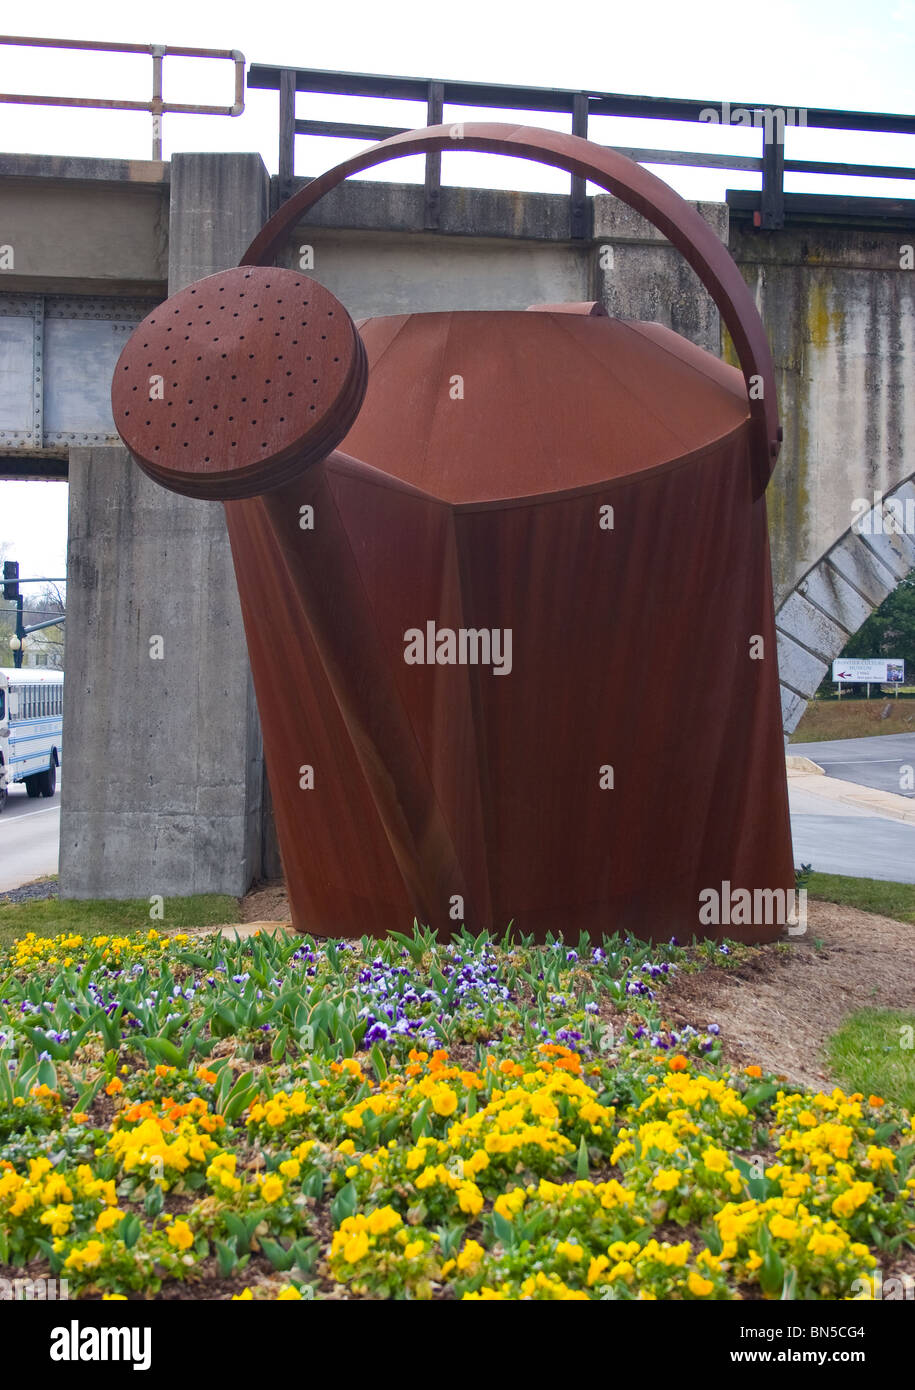 Giant metal watering can in Staunton, Virginia. Stock Photo